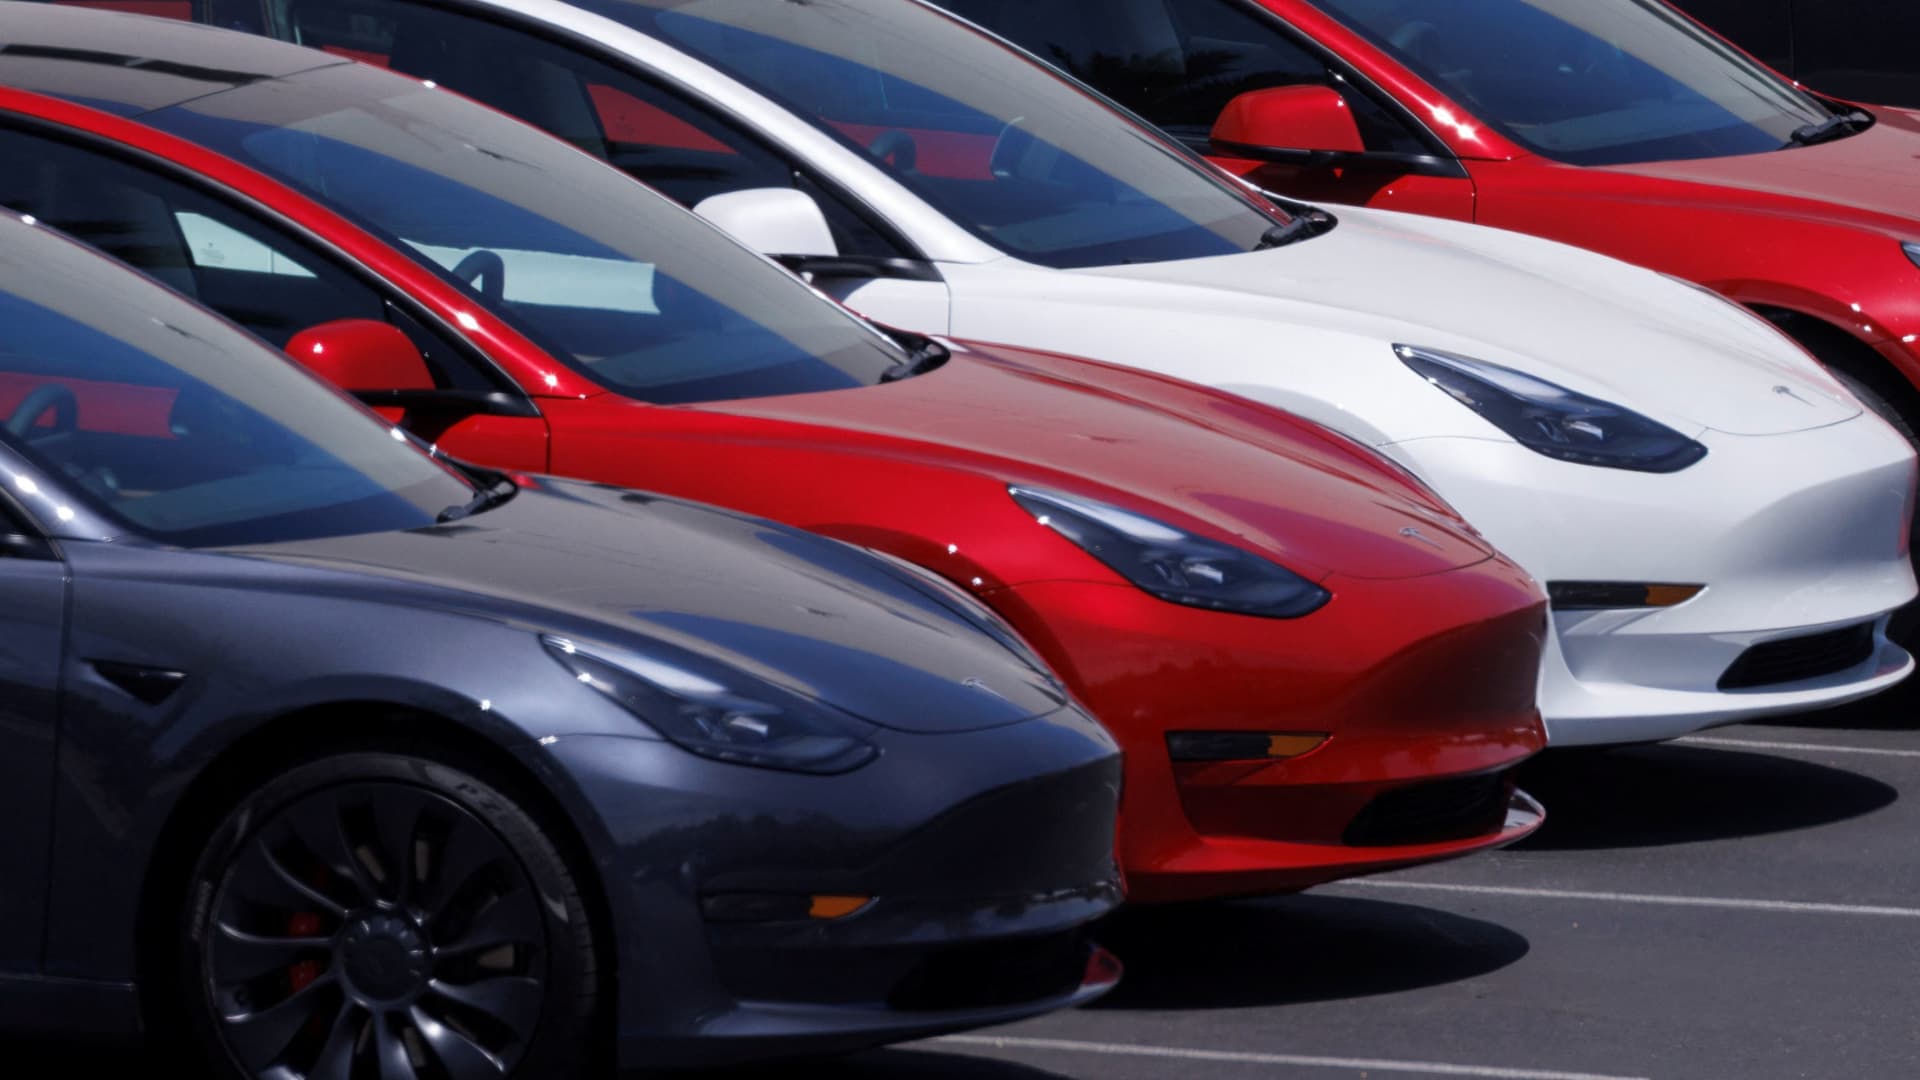 GM, Ford rising, Tesla falling in EV 'car wars' in U.S., Bank of America analyst says